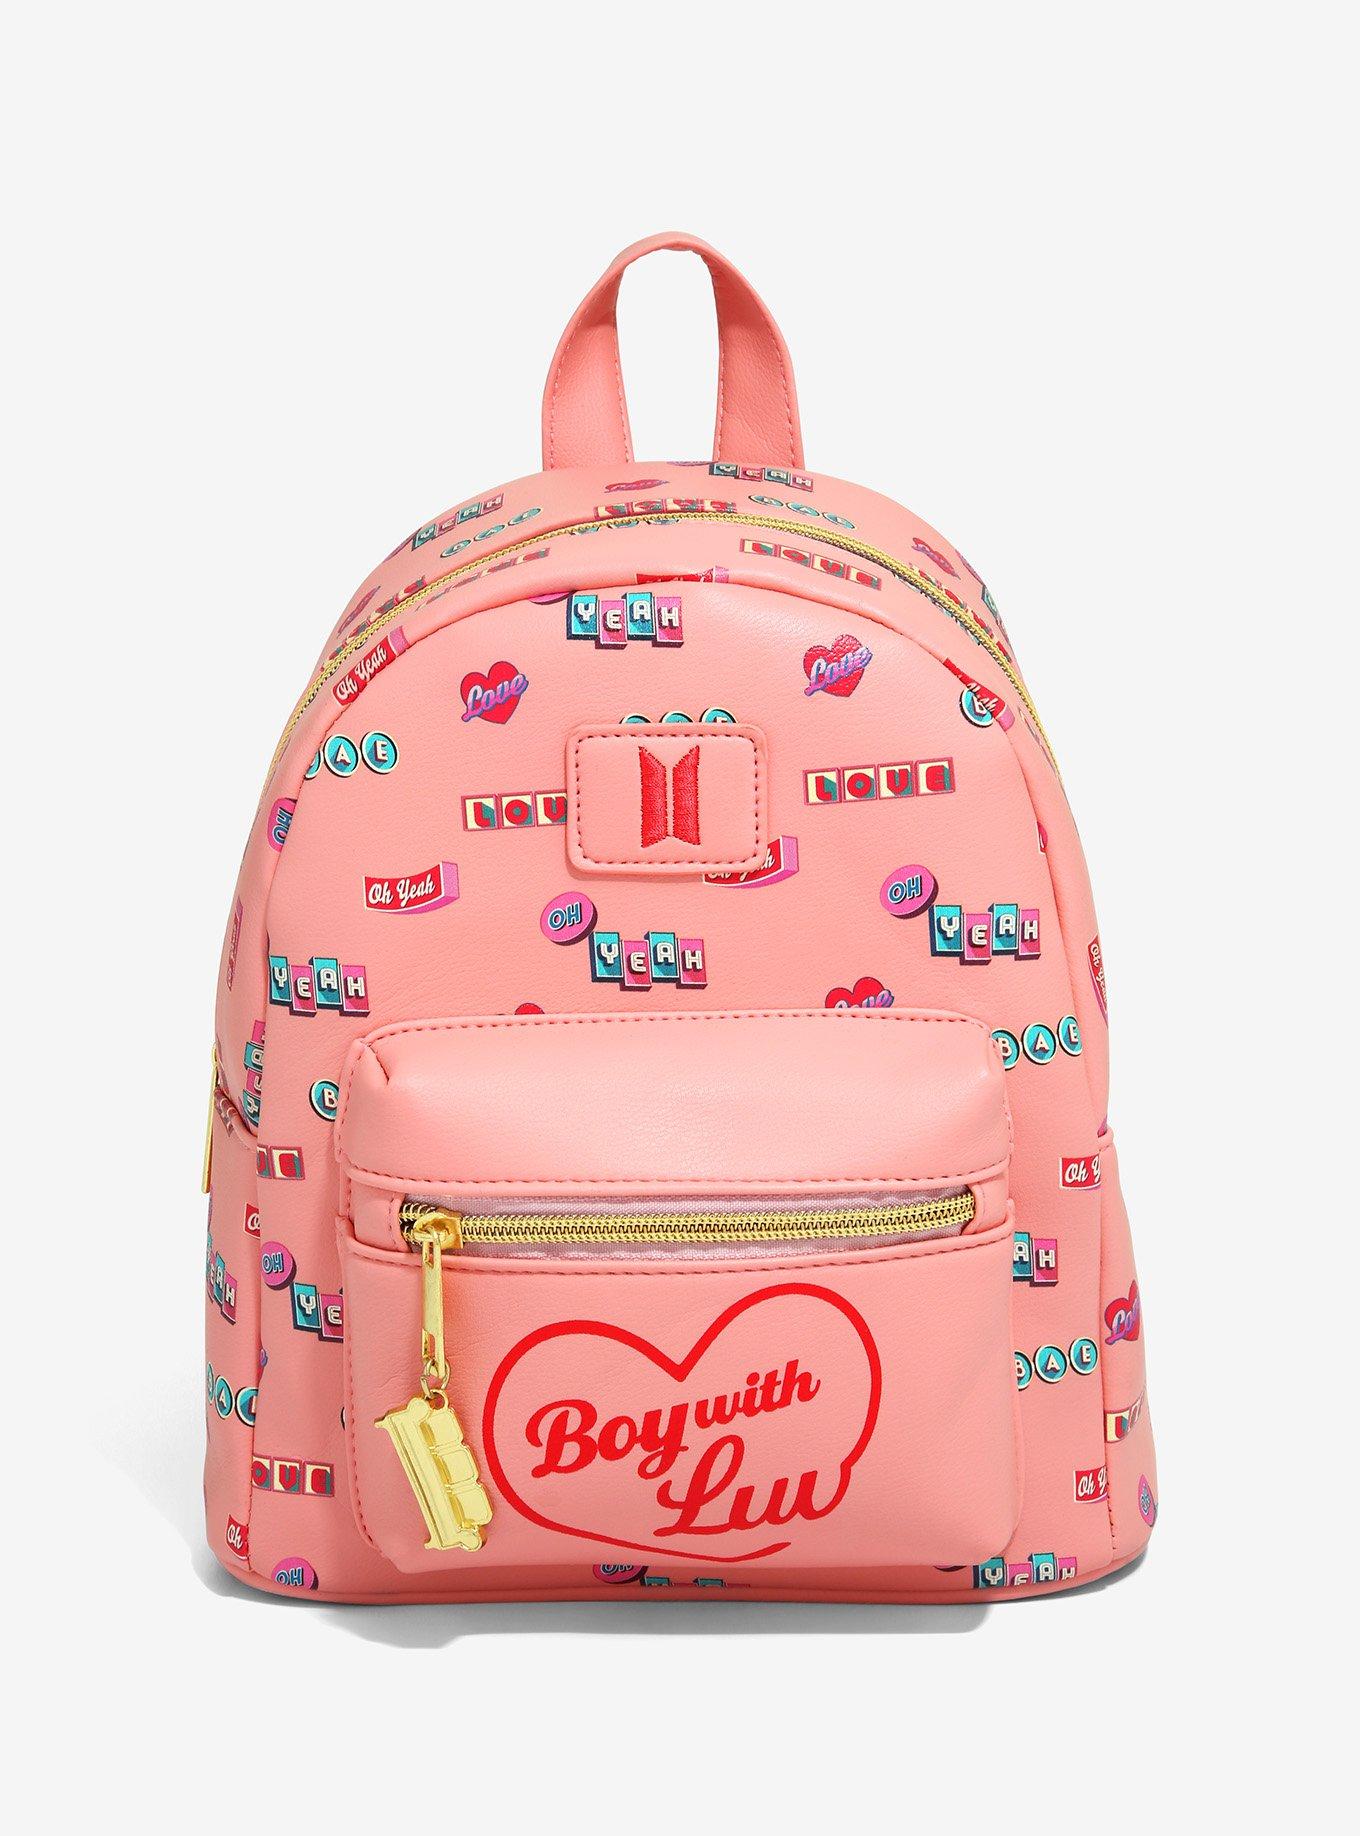 Bts School Bag 